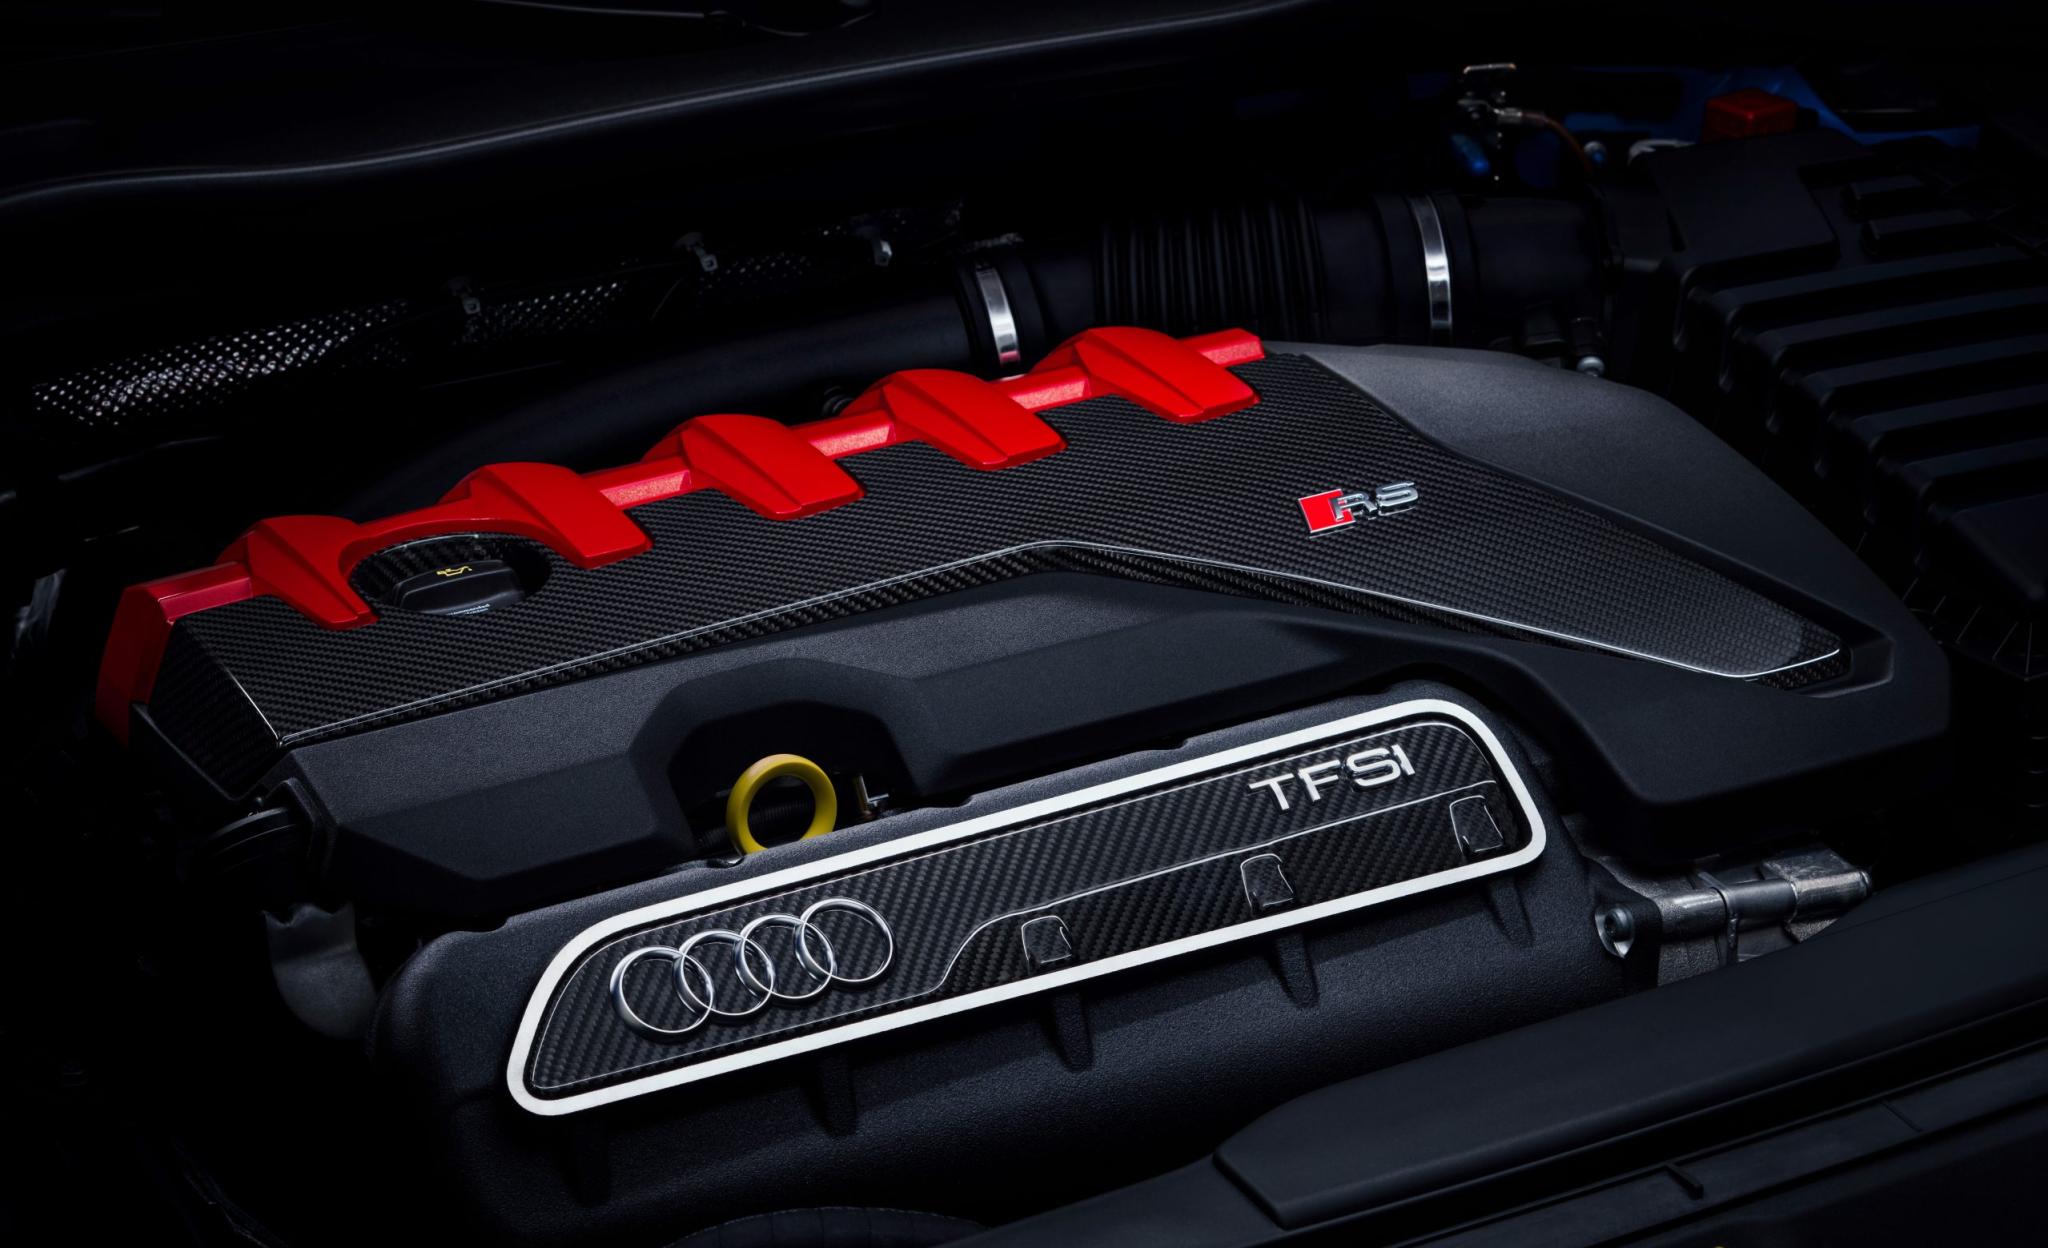 Audi 2.5 TFSI vijfcilinder turbo motor